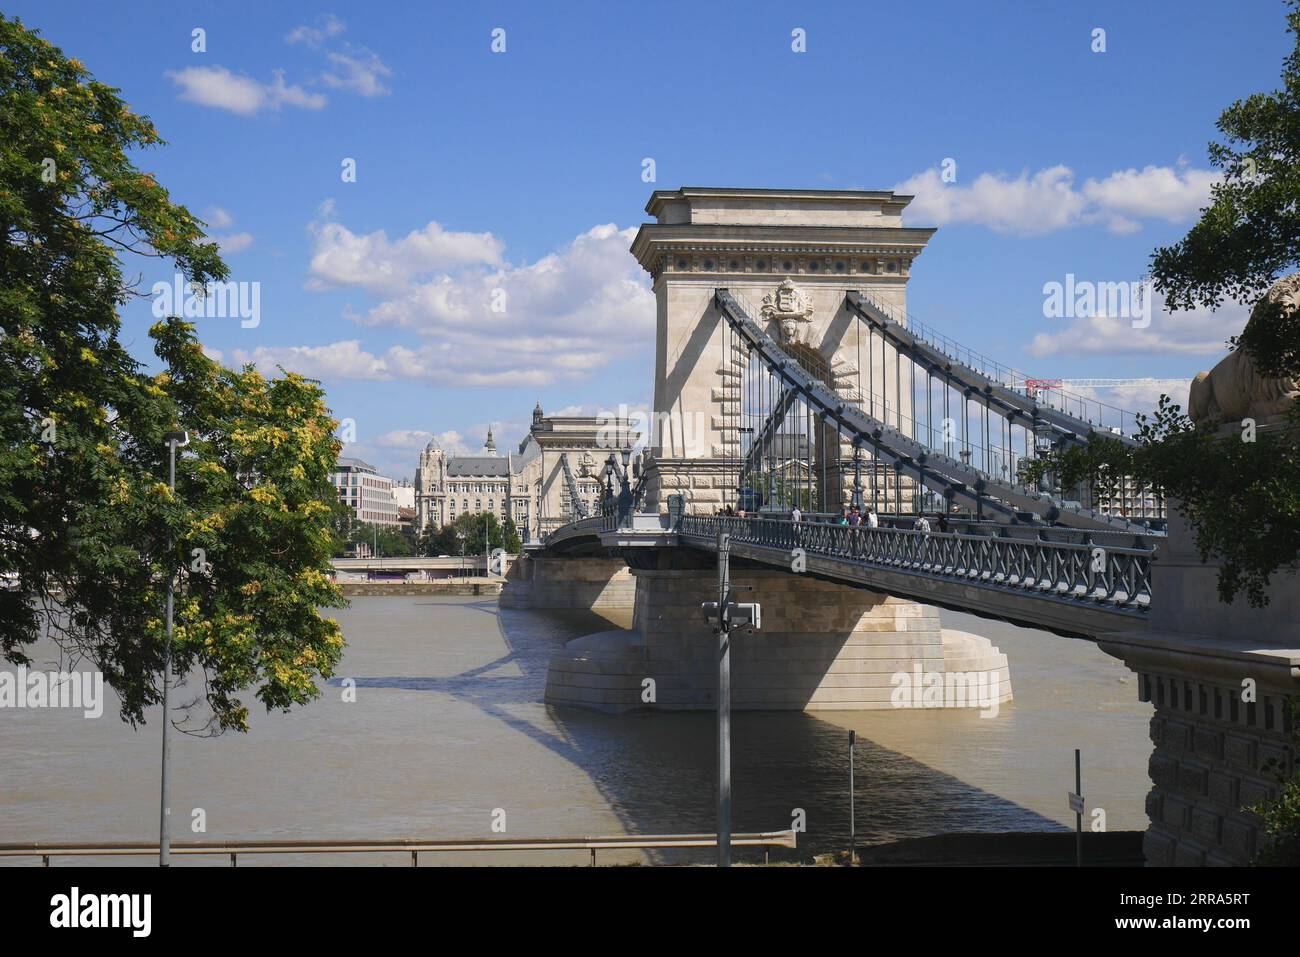 Chain Bridge, Szechenyi Lanchid, connecting Buda and Pest across the River Danube, Budapest, Hungary Stock Photo